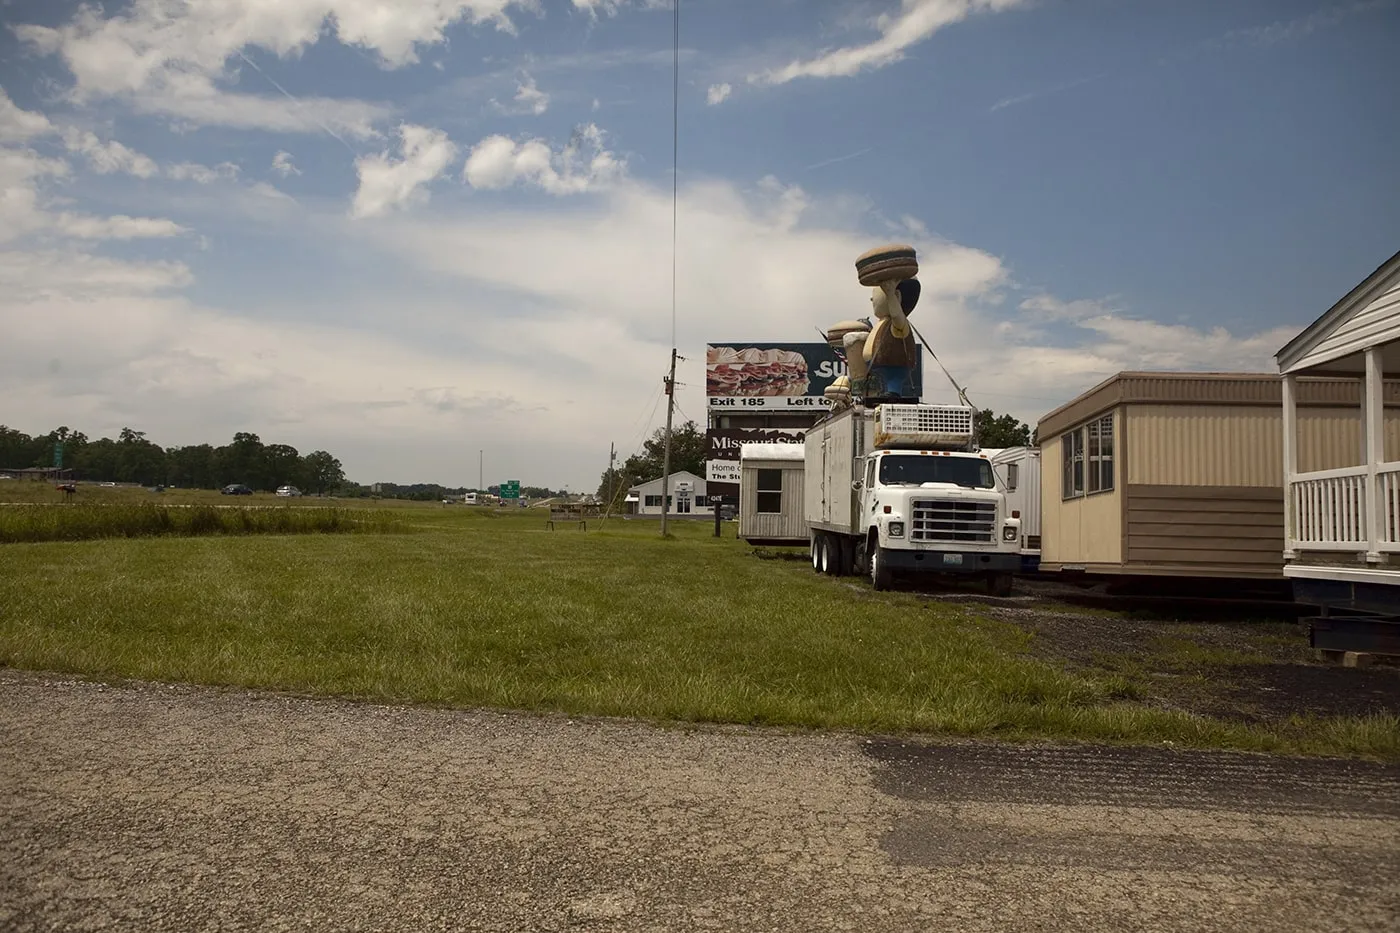 A&W Burger Family, a roadside attraction in Rolla, Missouri